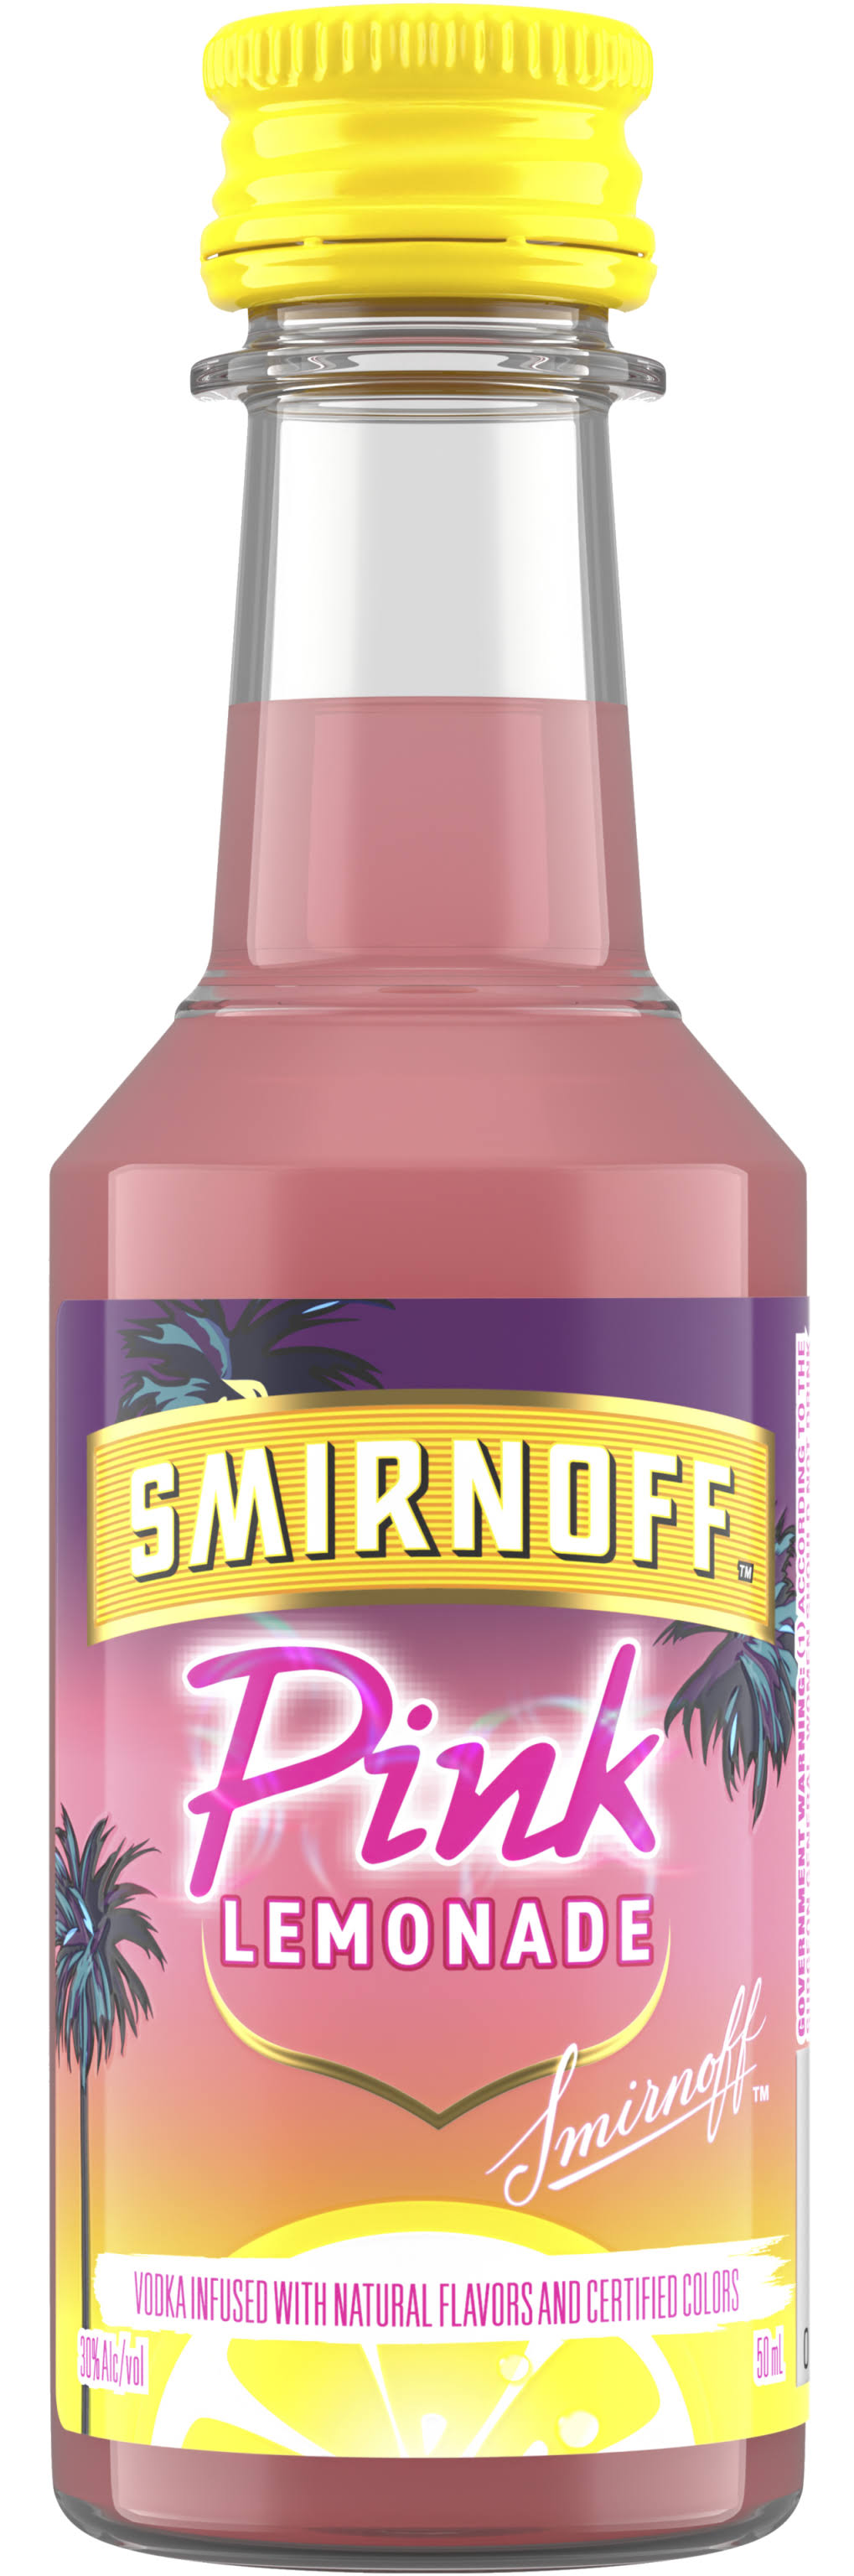 Smirnoff Pink Lemonade Vodka (50 ml)